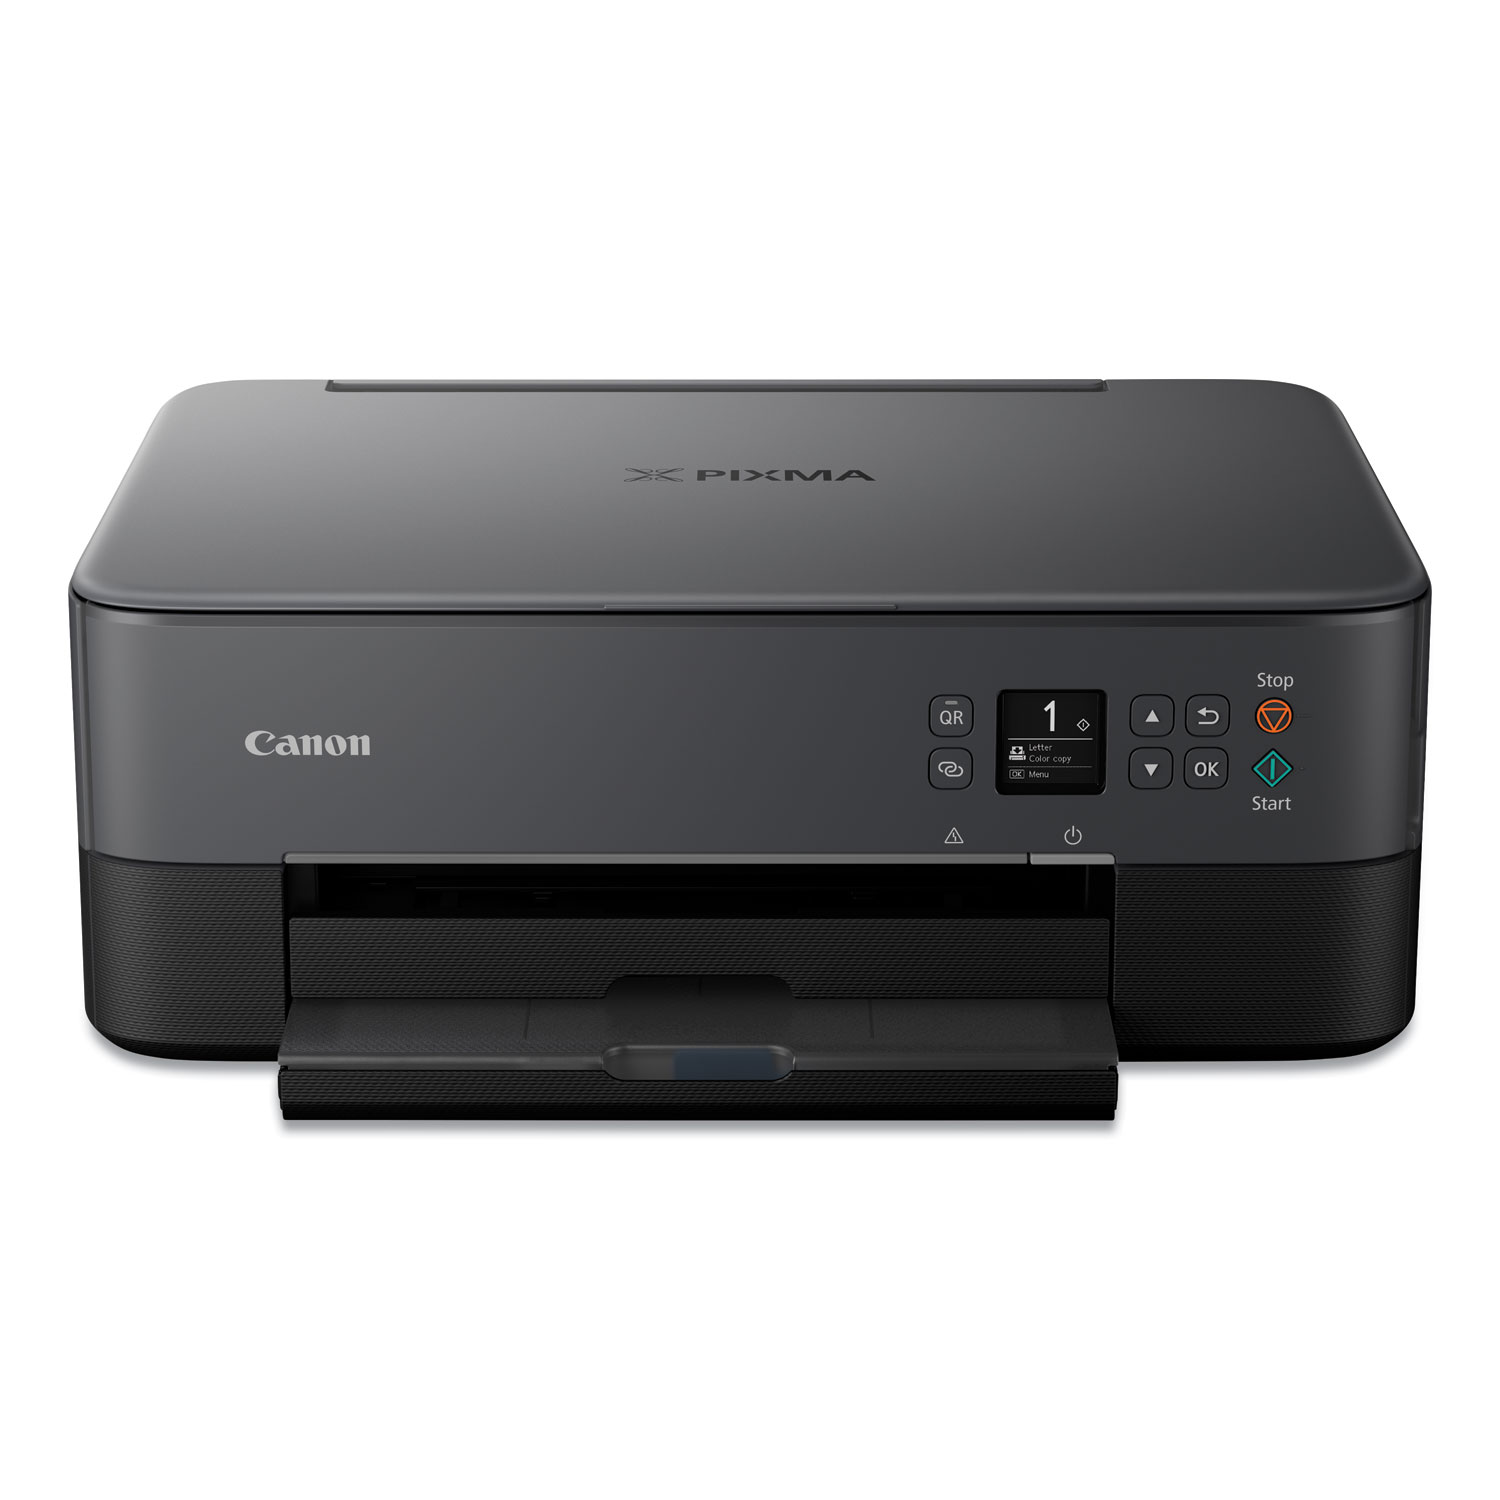  Canon 4462C002 PIXMA TS6420 Wireless All-in-One Inkjet Printer, Copy/Print/Scan (CNM4462C002) 